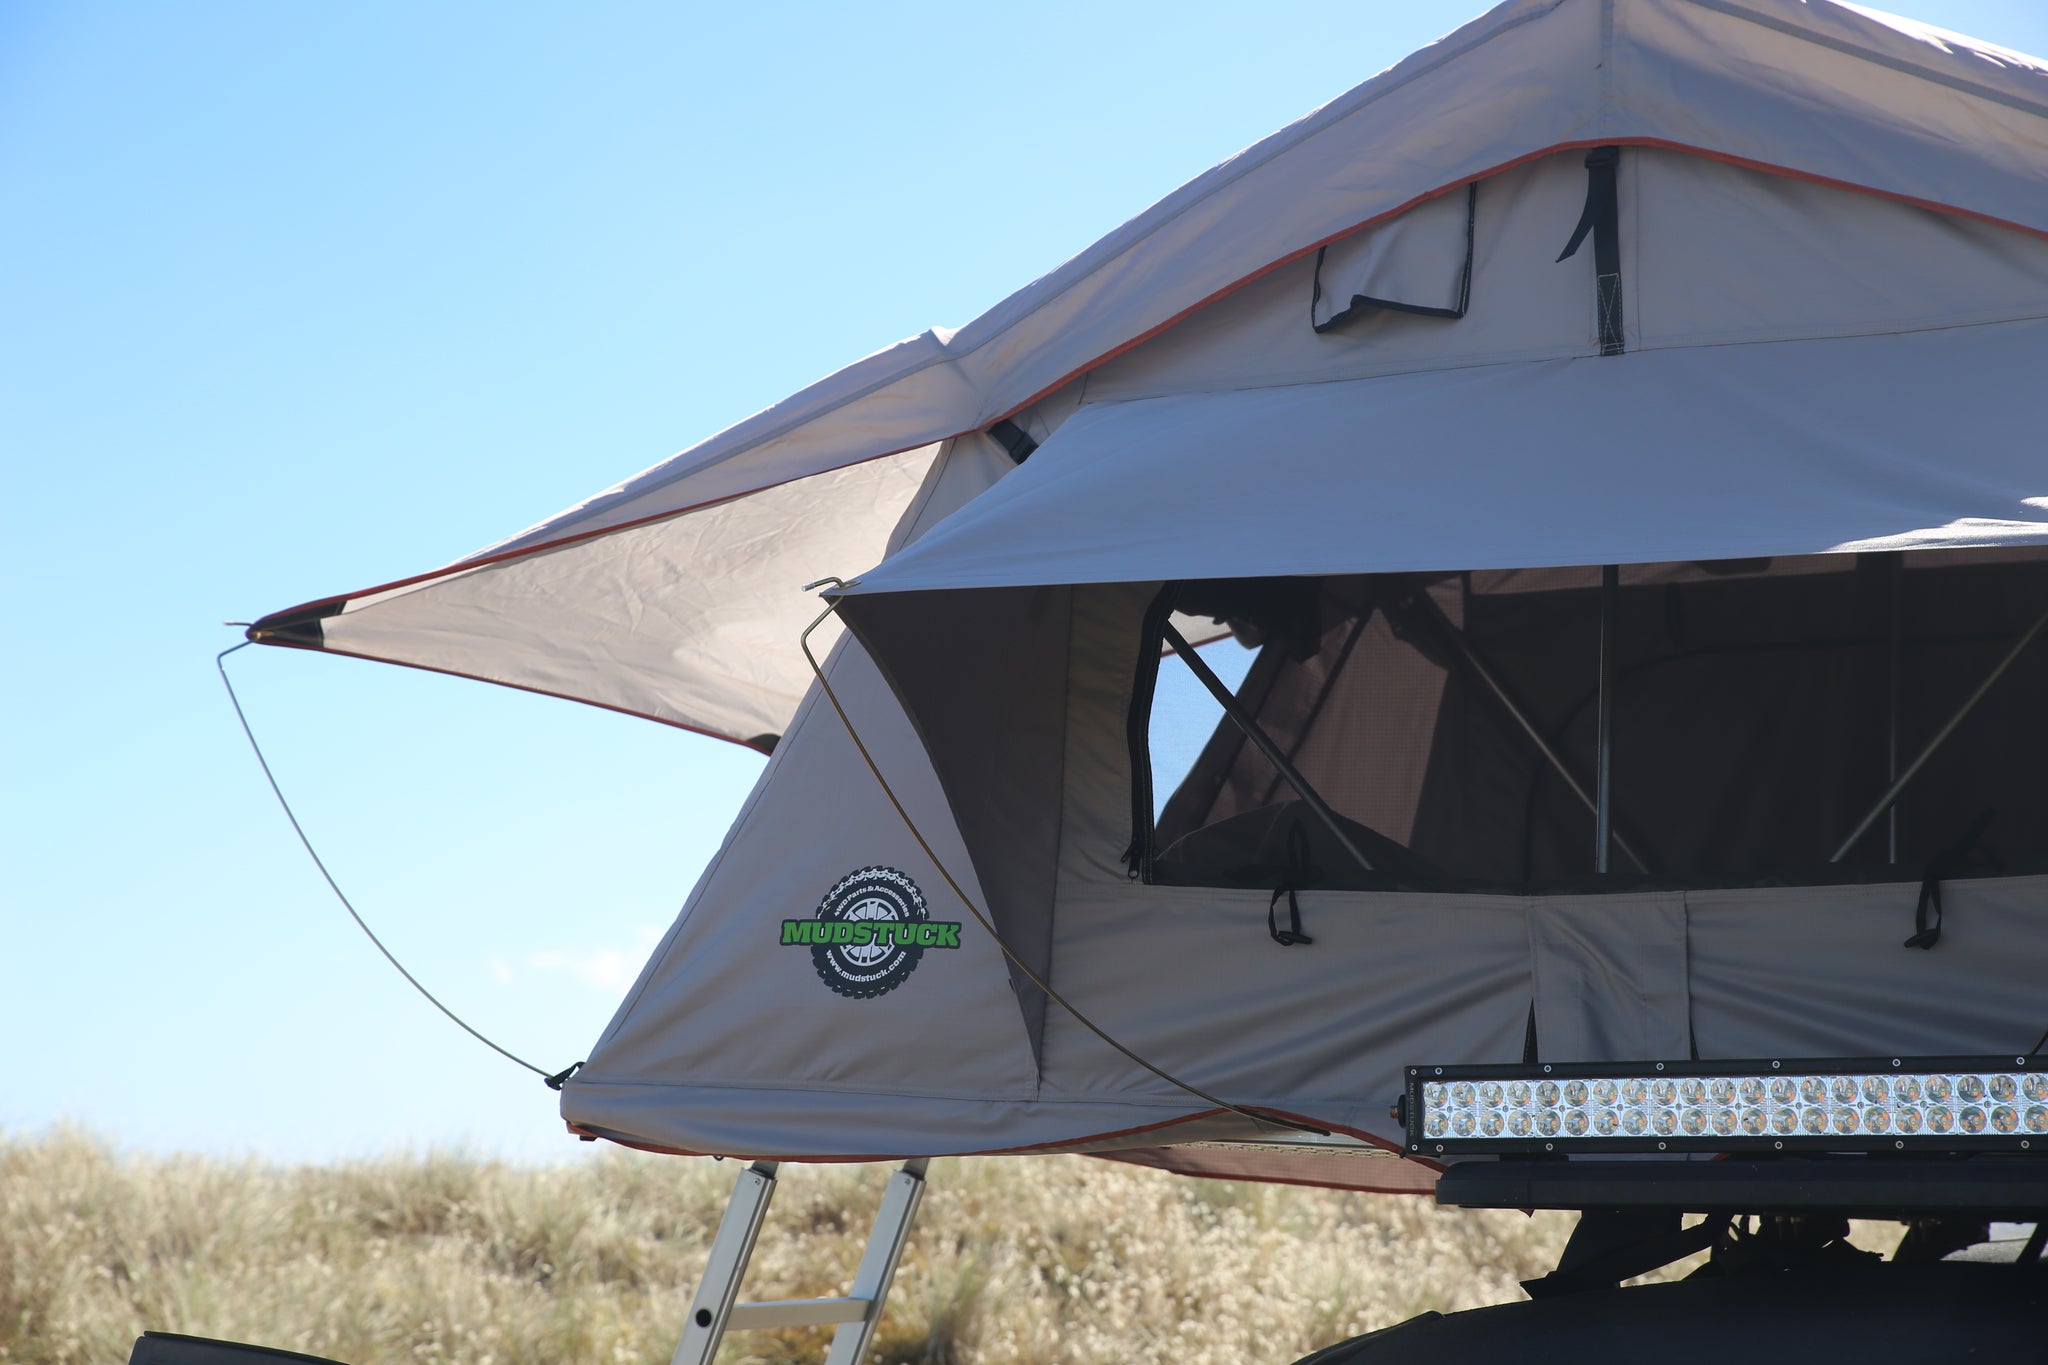 Landcruiser 100 series with Mudstuck Roof Top tent